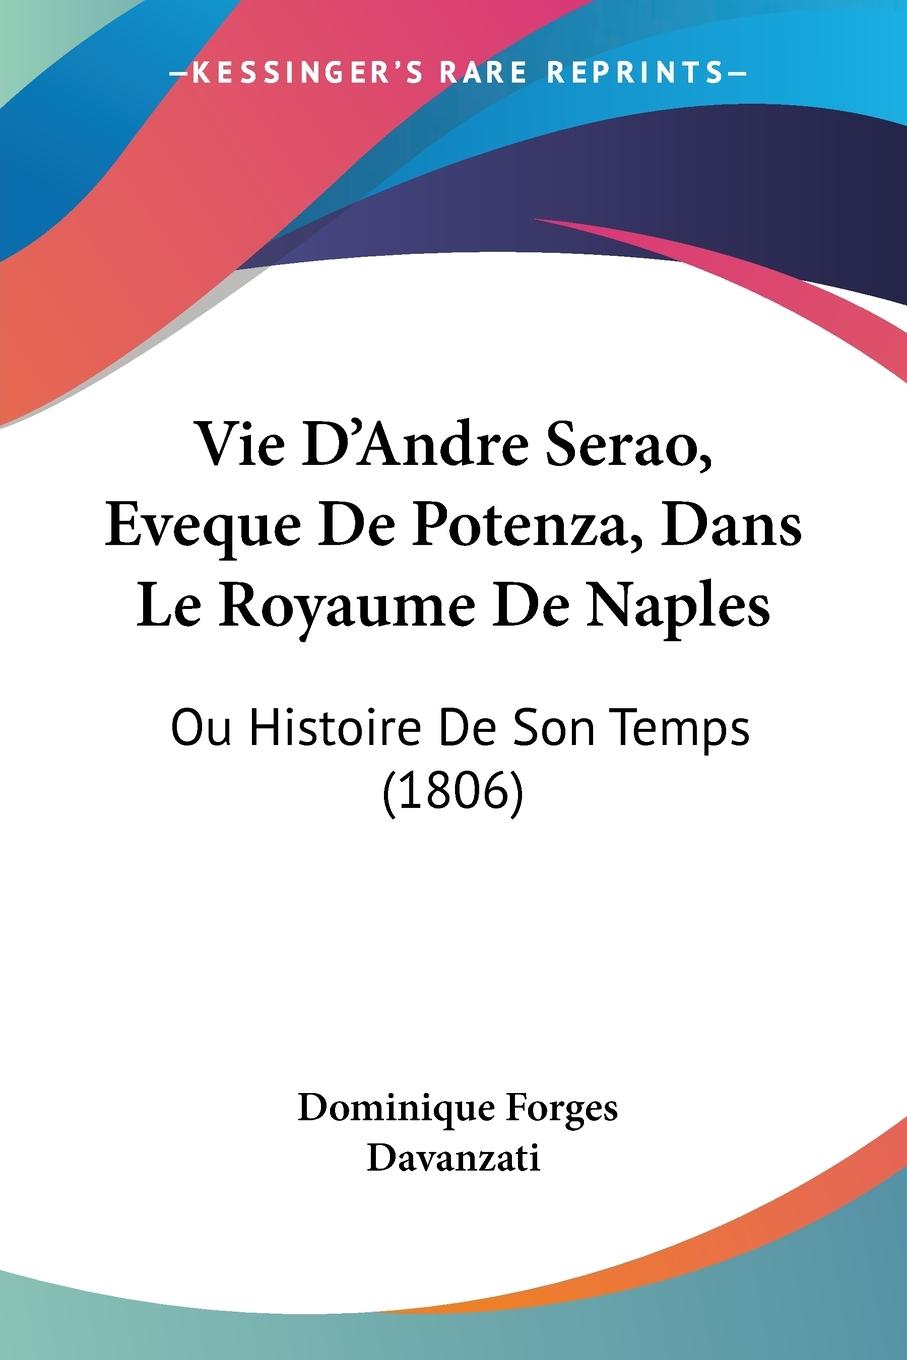 Vie D Andre Serao, Eveque De Potenza, Dans Le Royaume De Naples - Davanzati, Dominique Forges